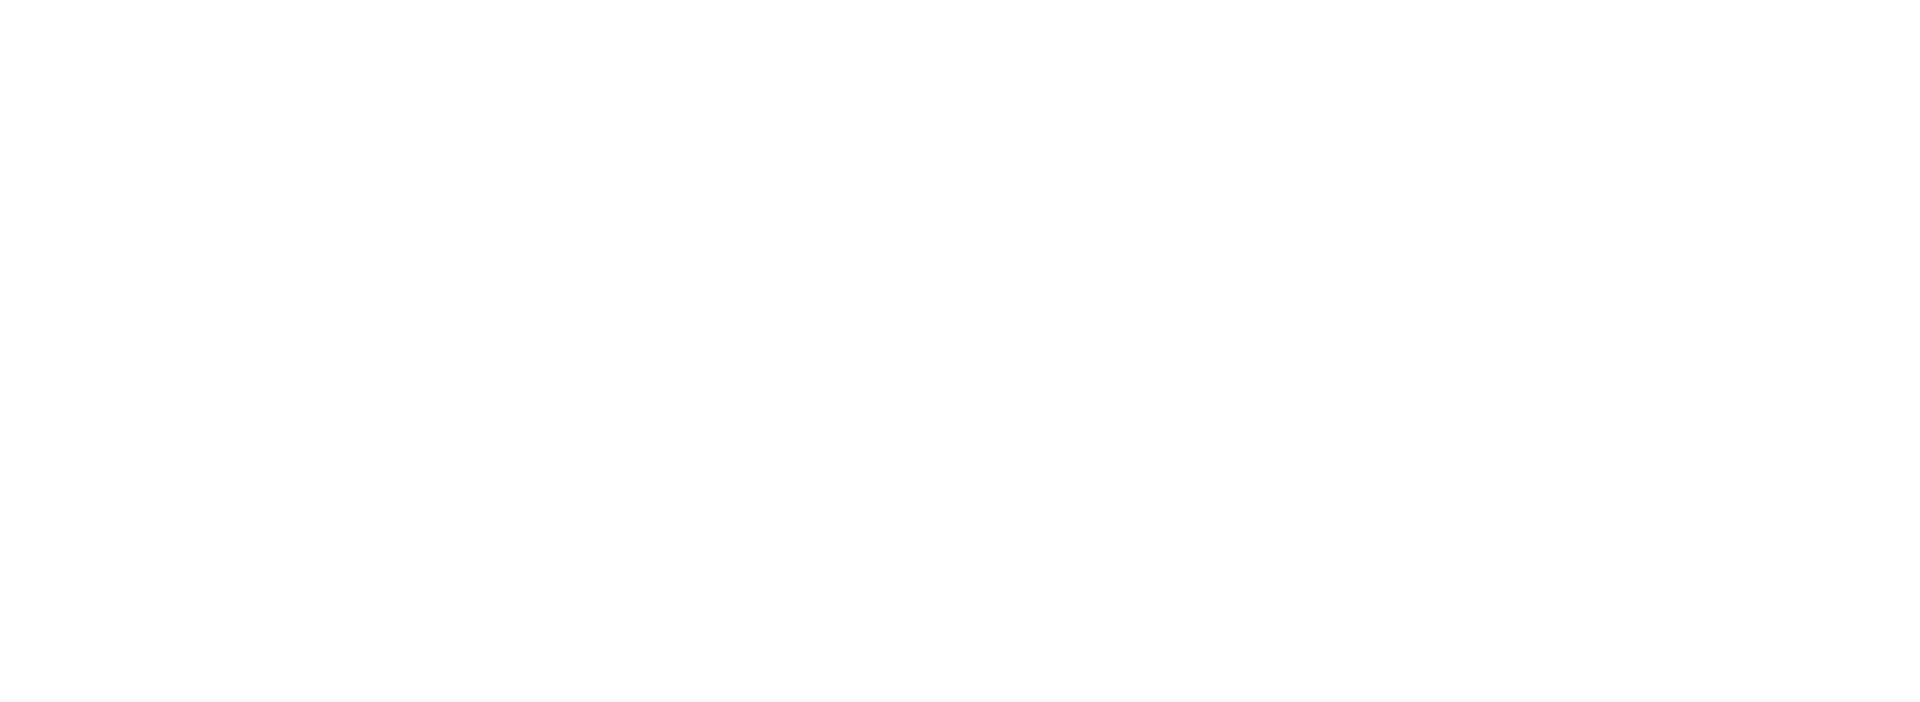 Retirement Income Planning Services, LLC